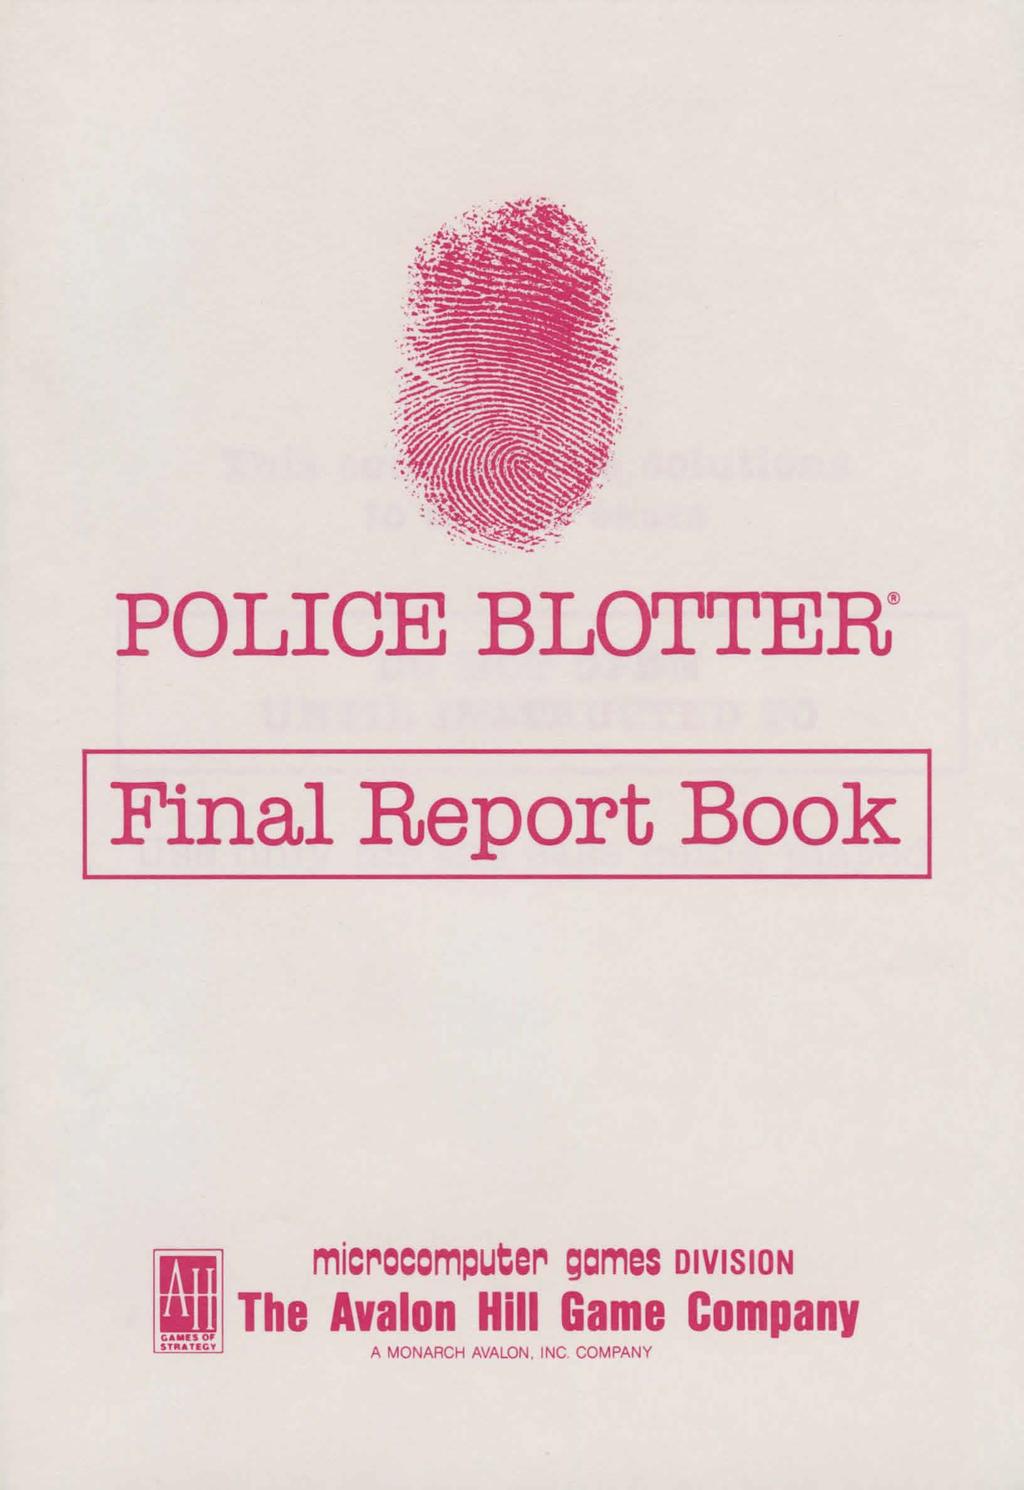 POLICE BLOTTER I Final Report Book I M11 mic~ocom~ute~ ;cimes DIVISION